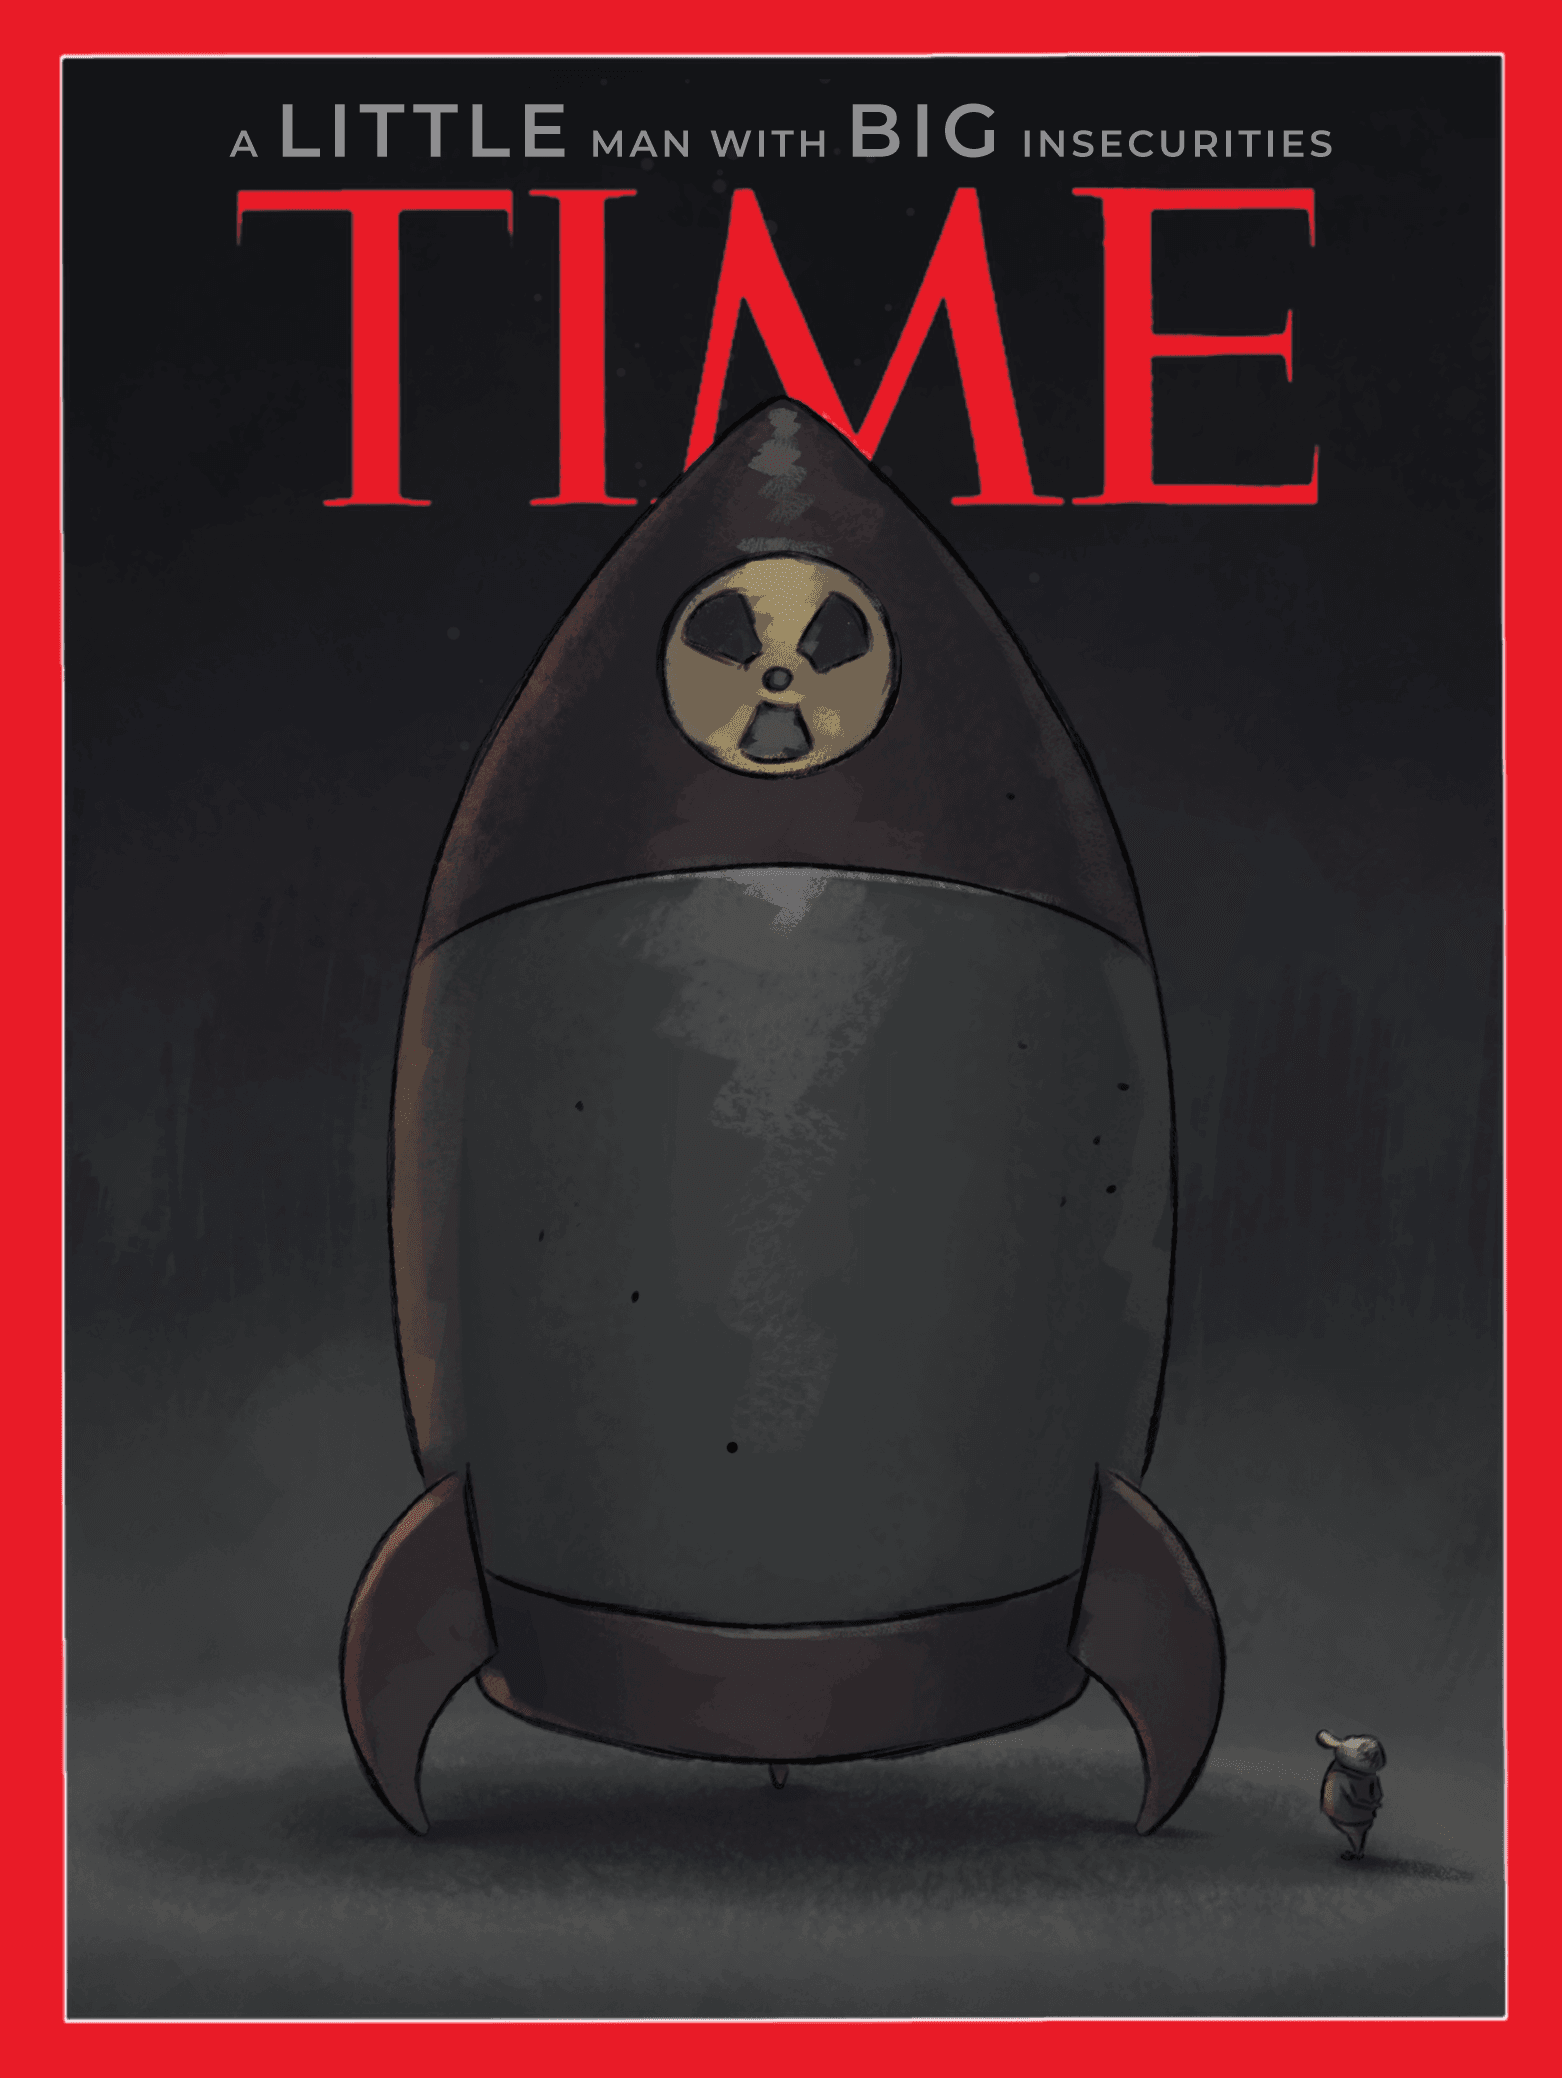 Putin in Time magazine